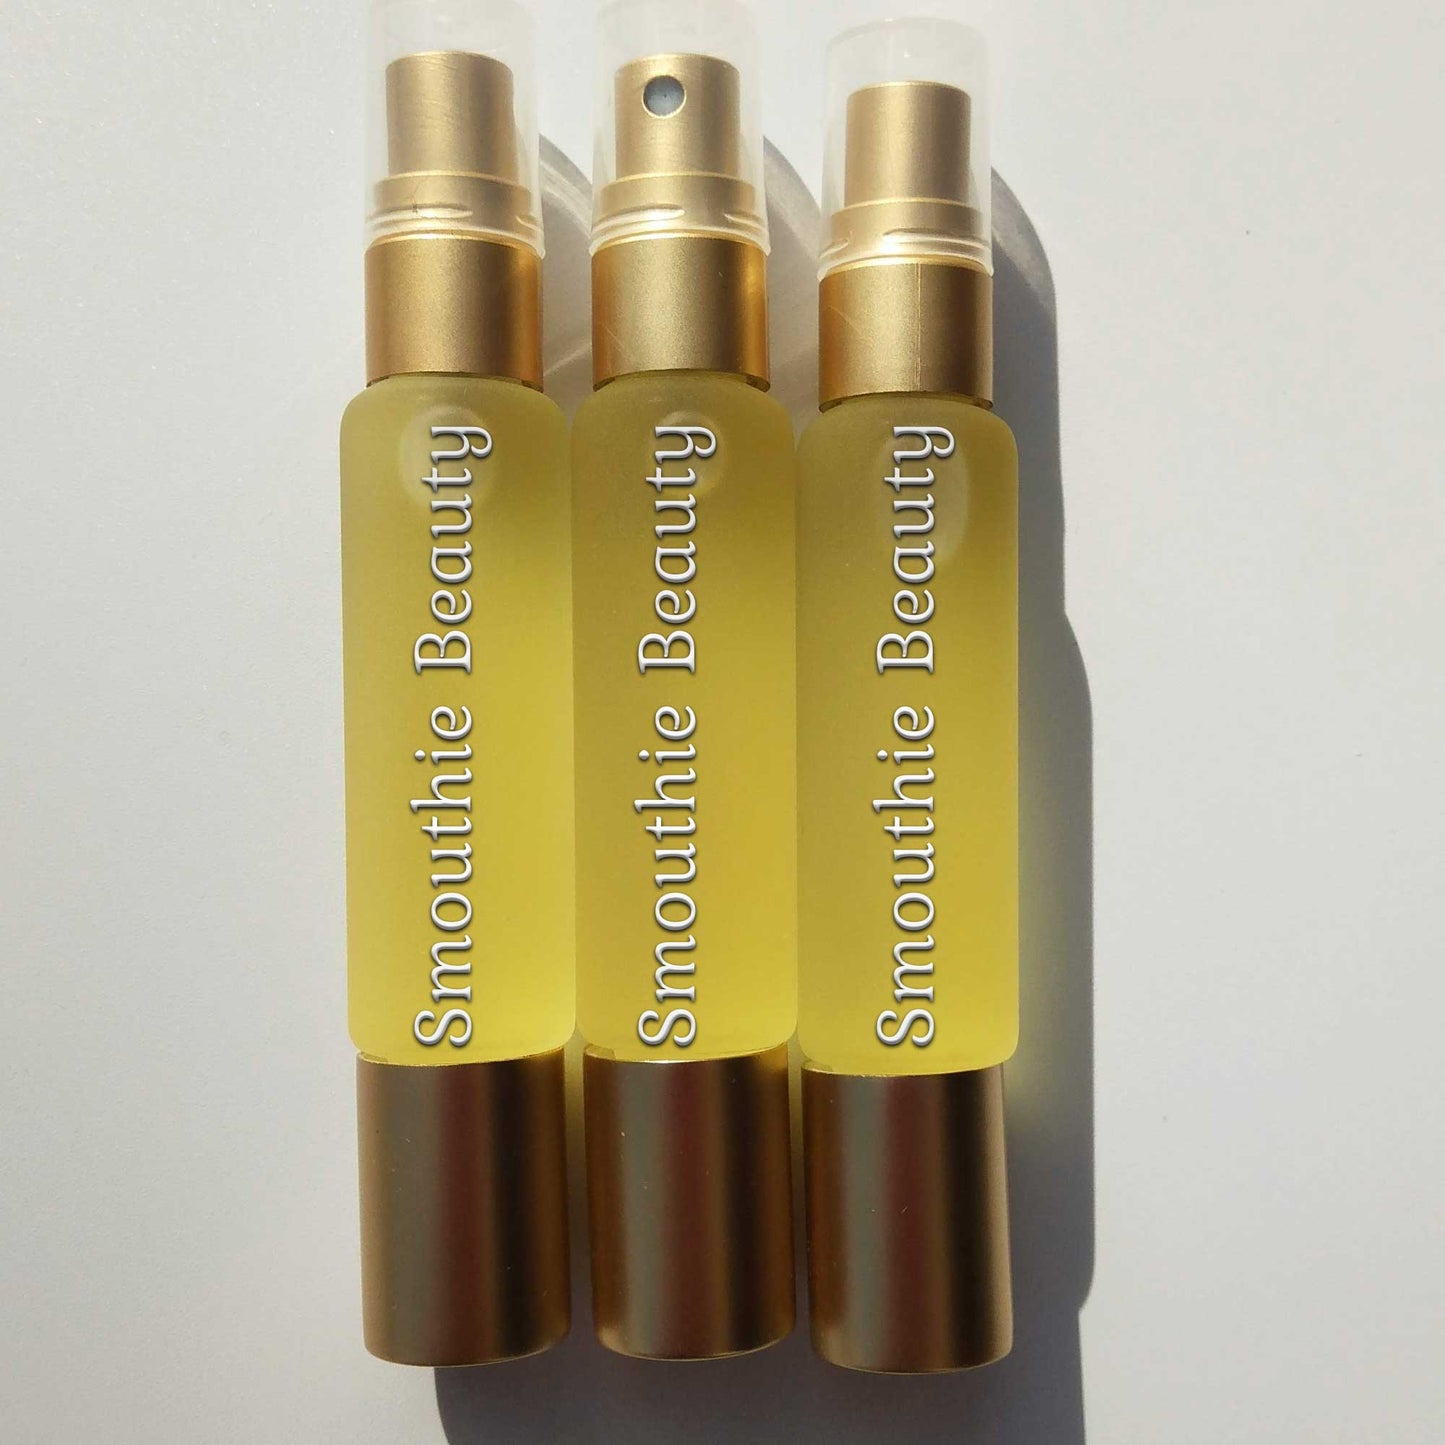 Island Water <br/>2-N-1 Perfume Oil Roll-On Fragrance